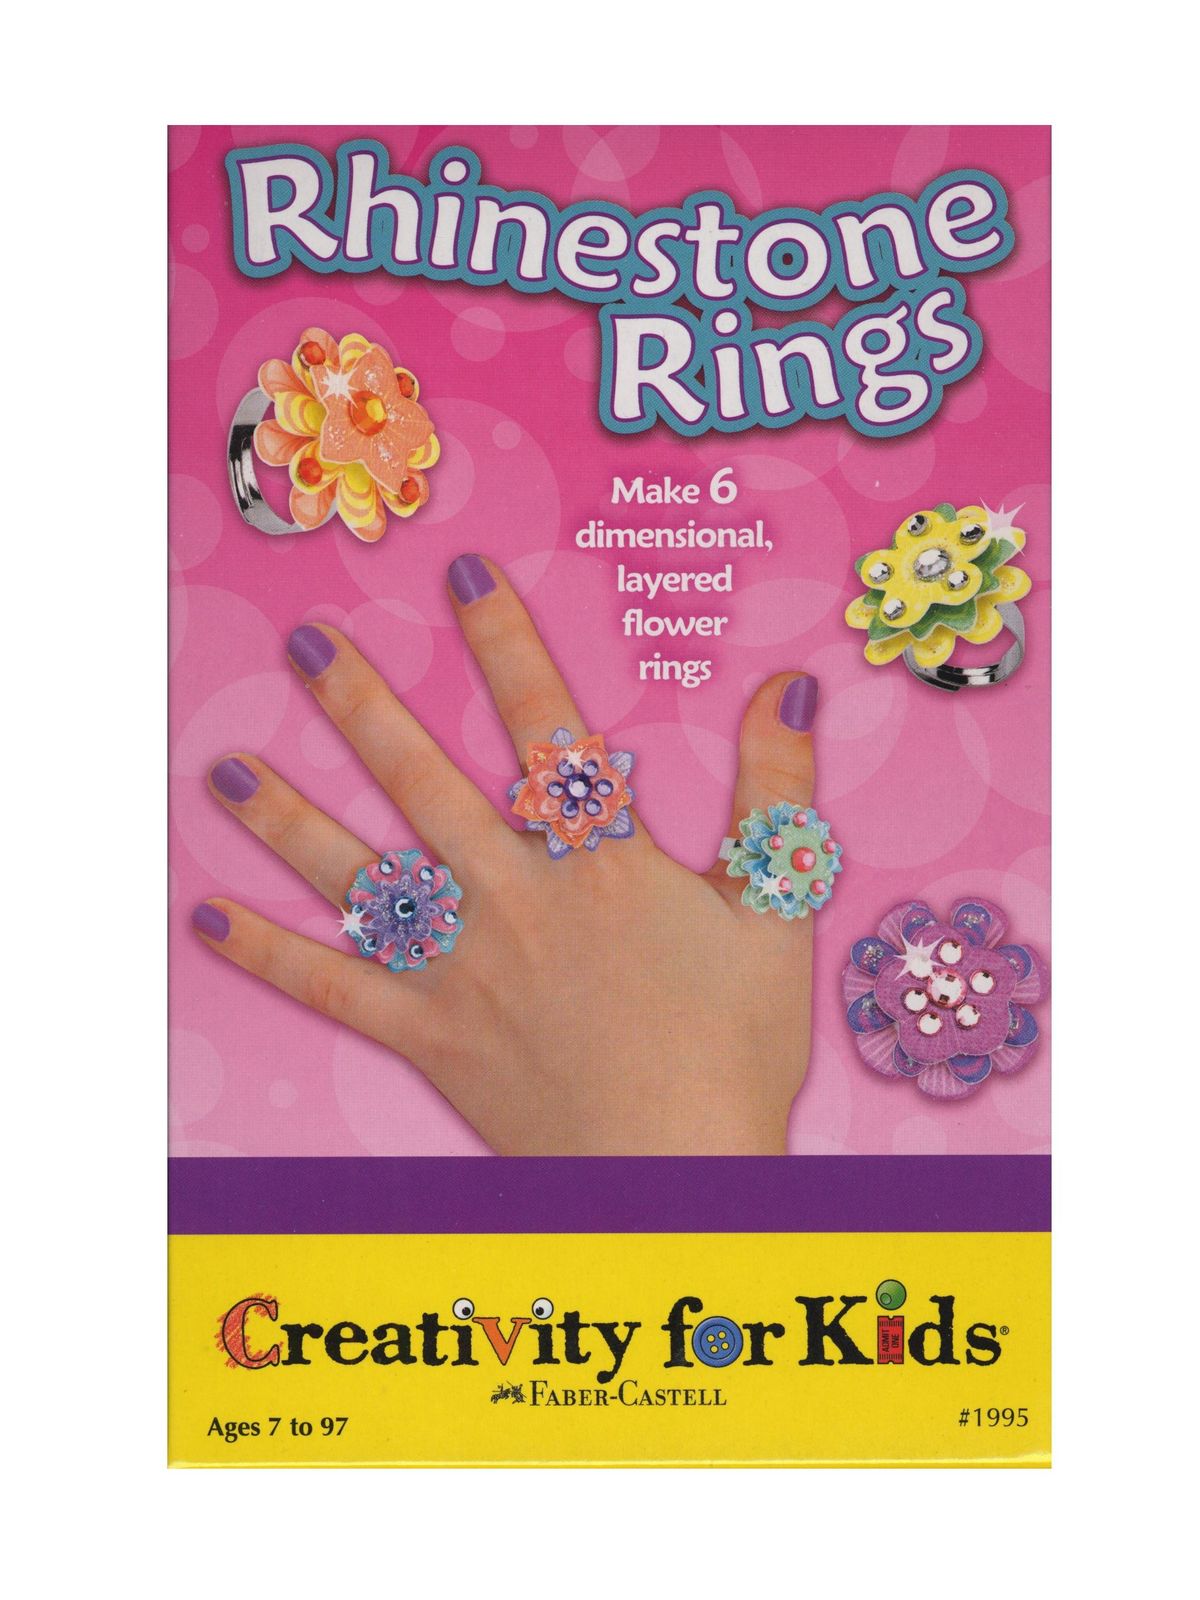 Rhinestone Rings Mini Kit Each